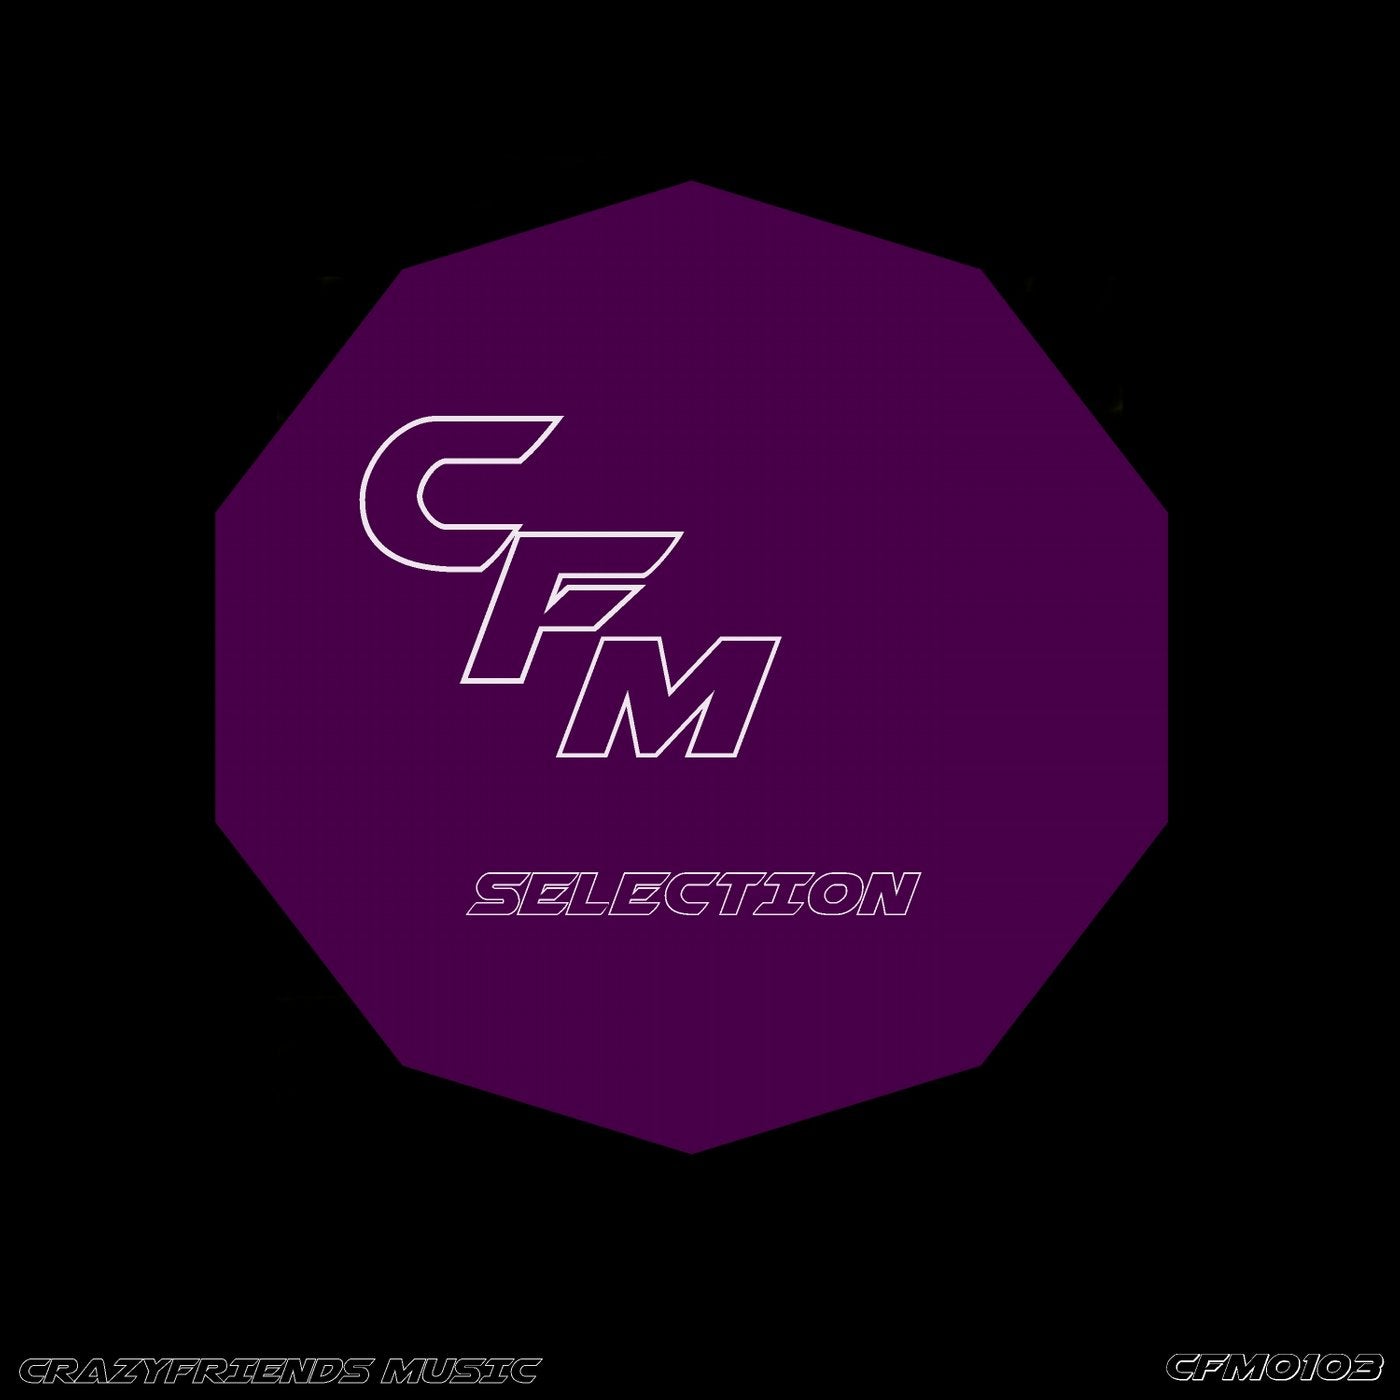 CFM SELECTION